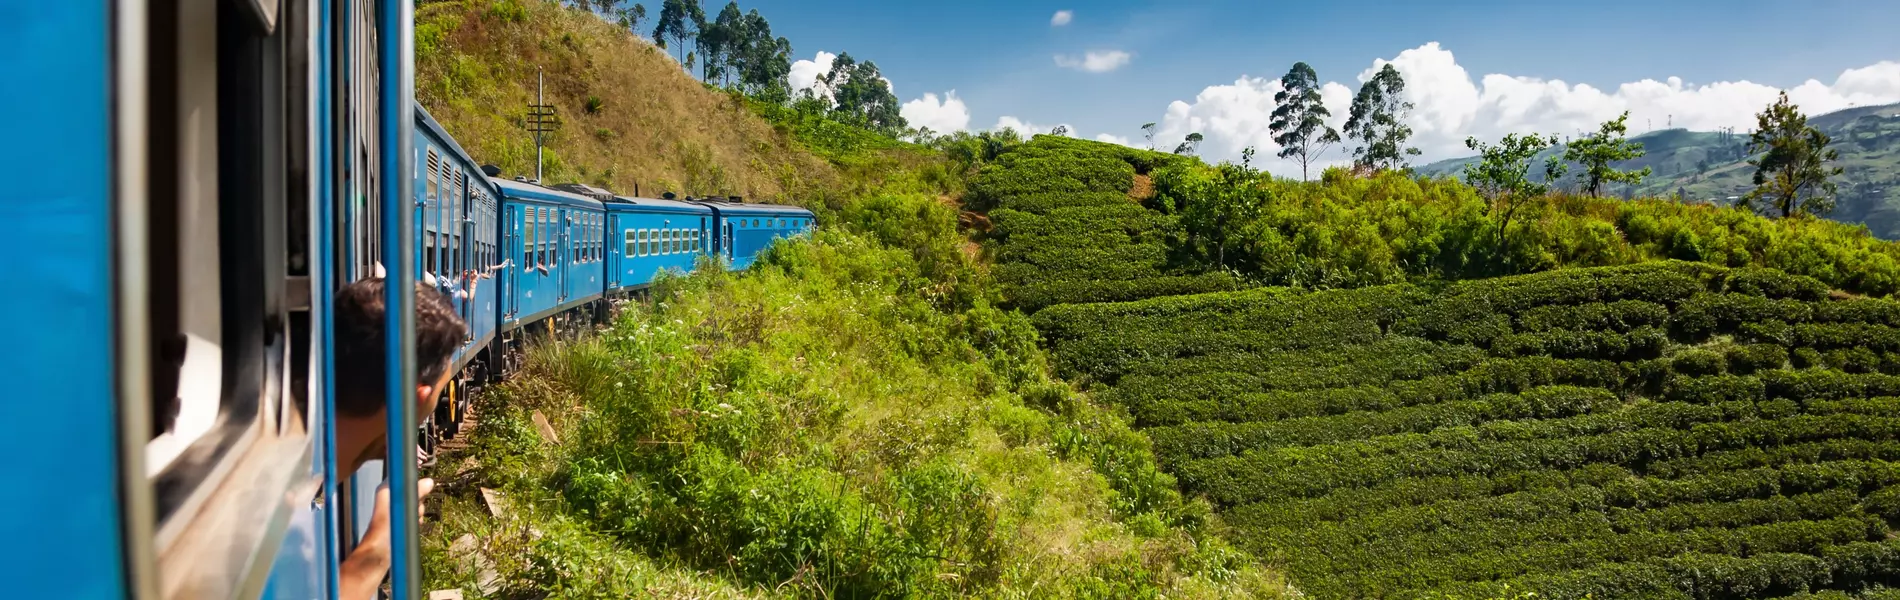 Shutterstock 1250000320 Recortada Sri Lanka Tren